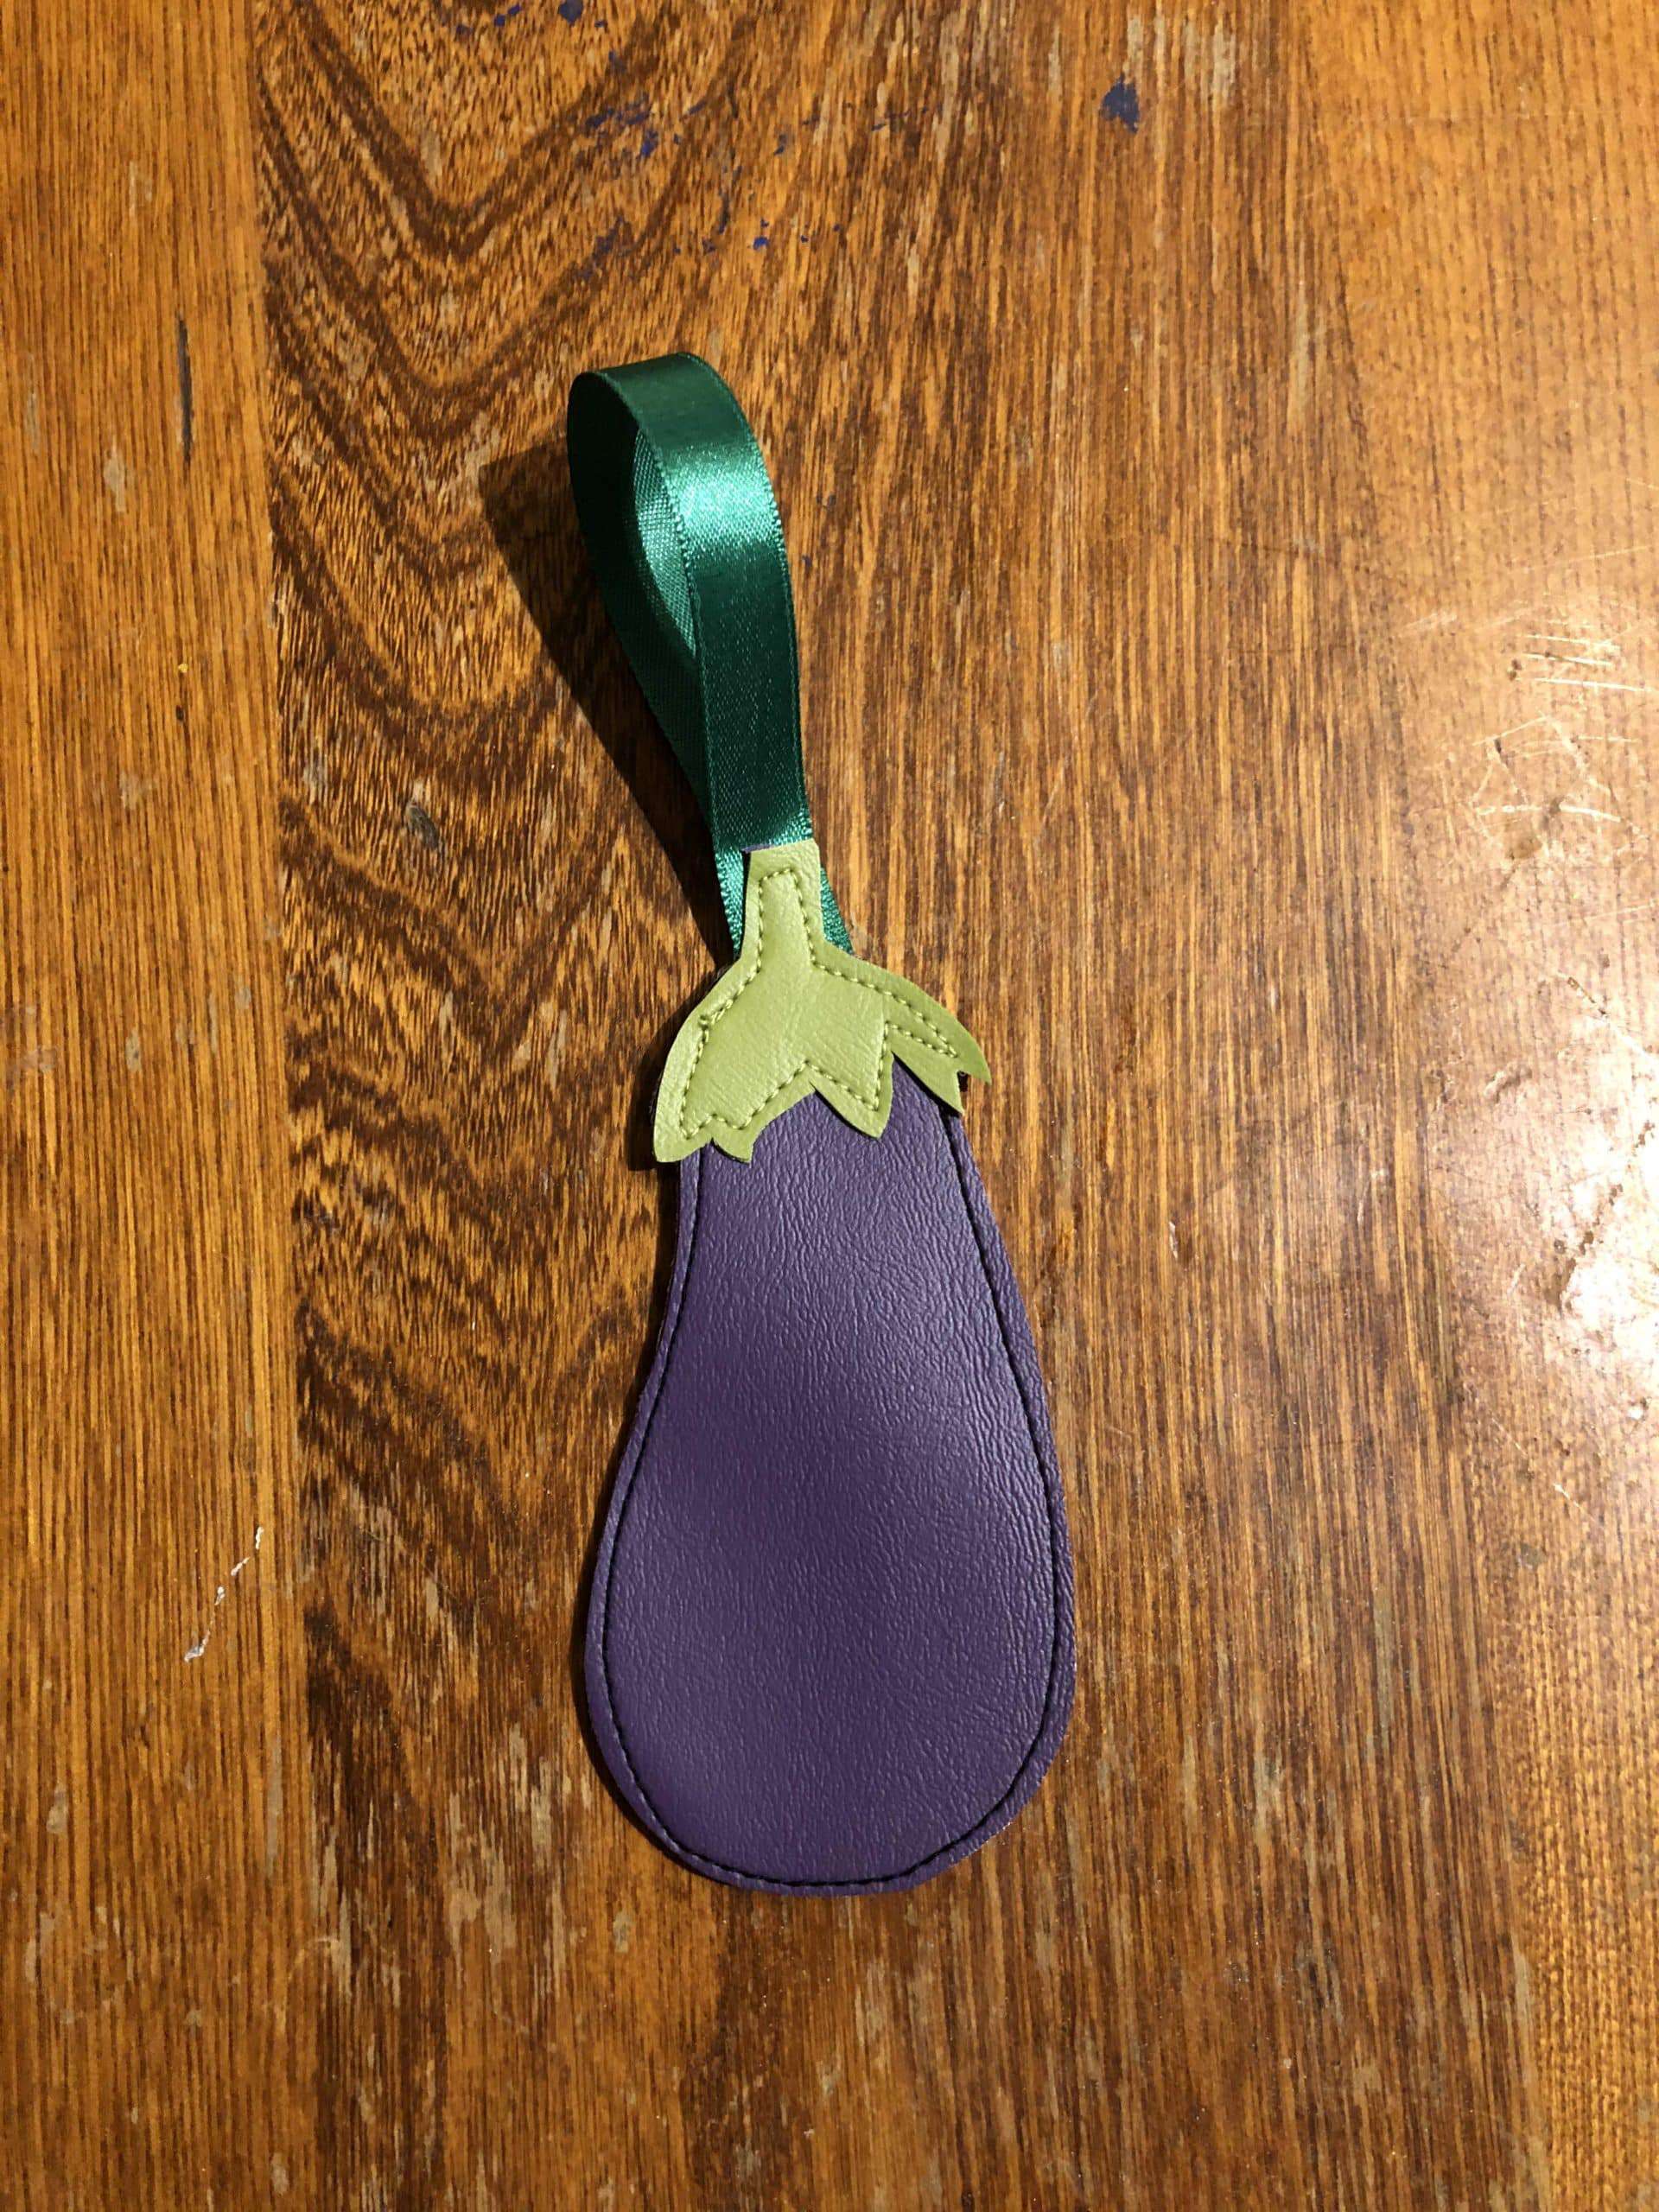 Eggplant ornament